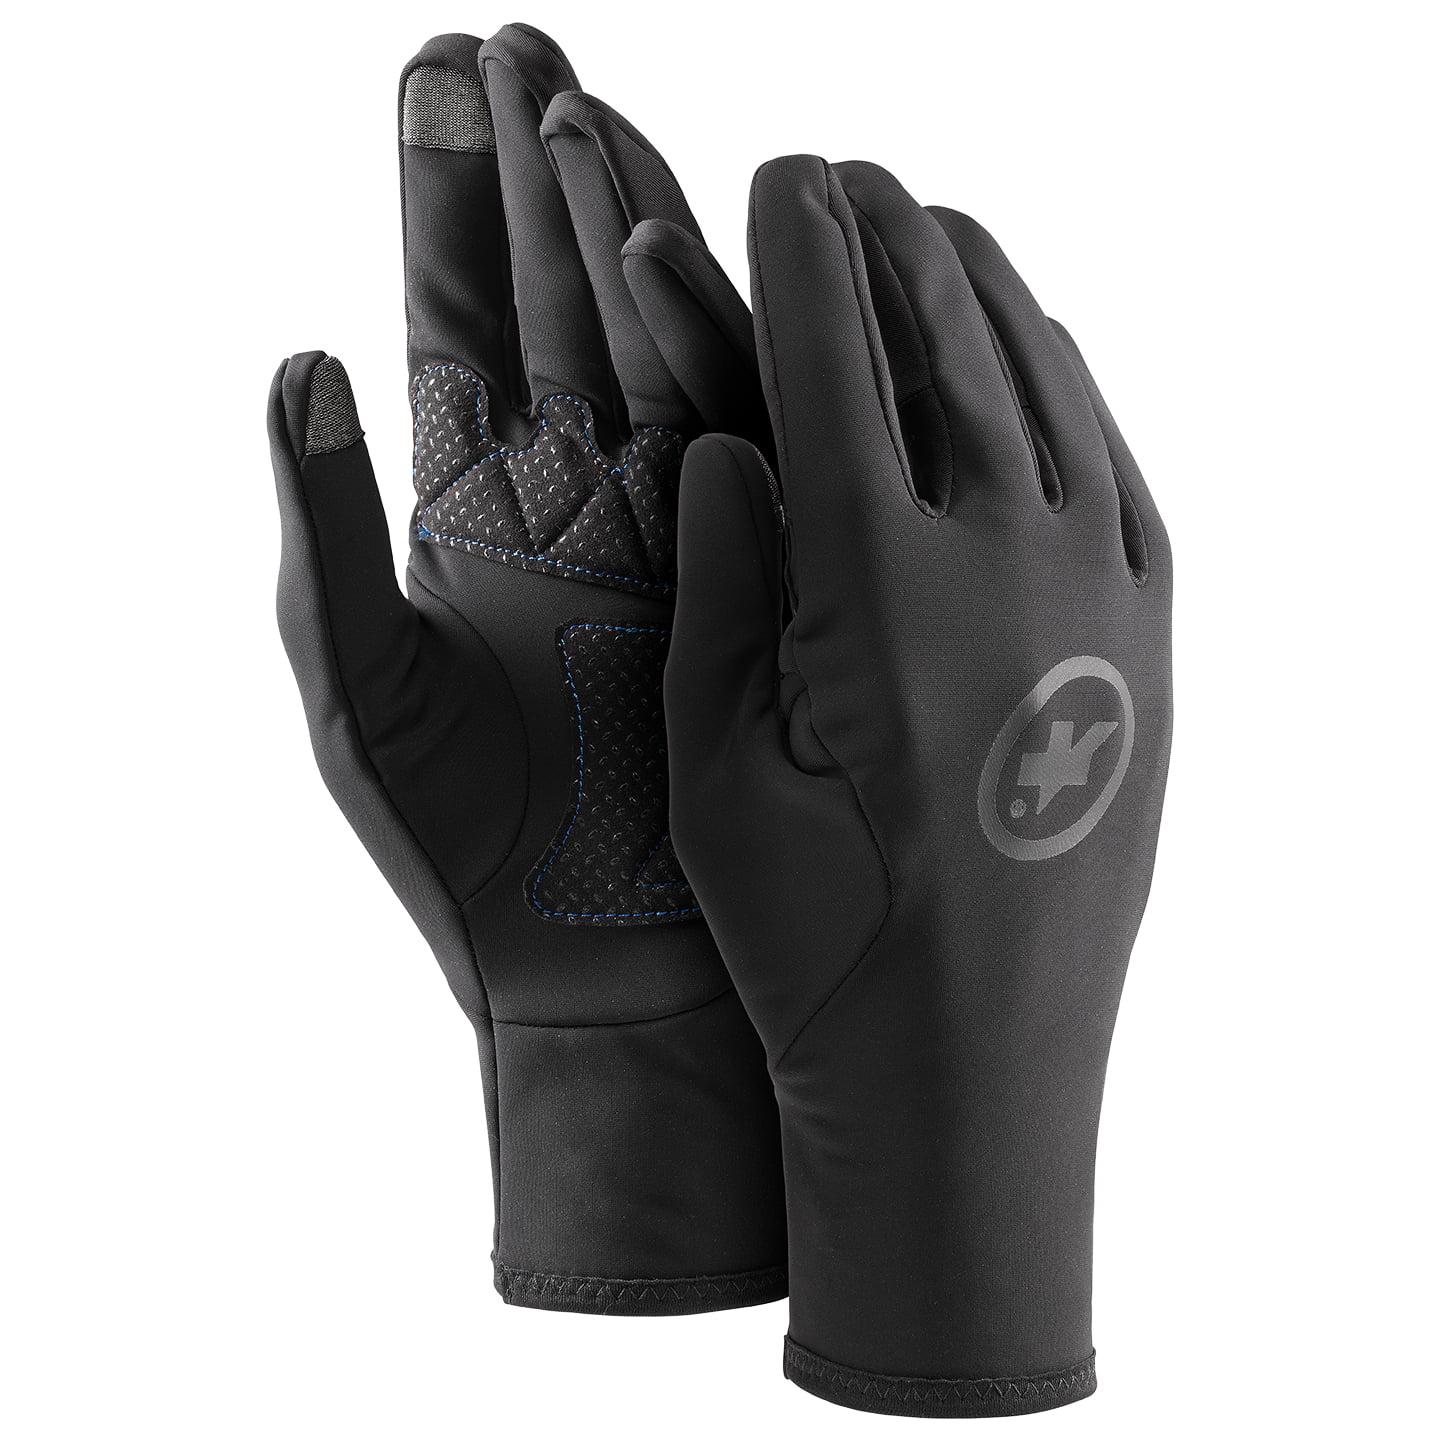 ASSOS EVO Winter Gloves Winter Cycling Gloves, for men, size M, Cycling gloves, Cycling gear